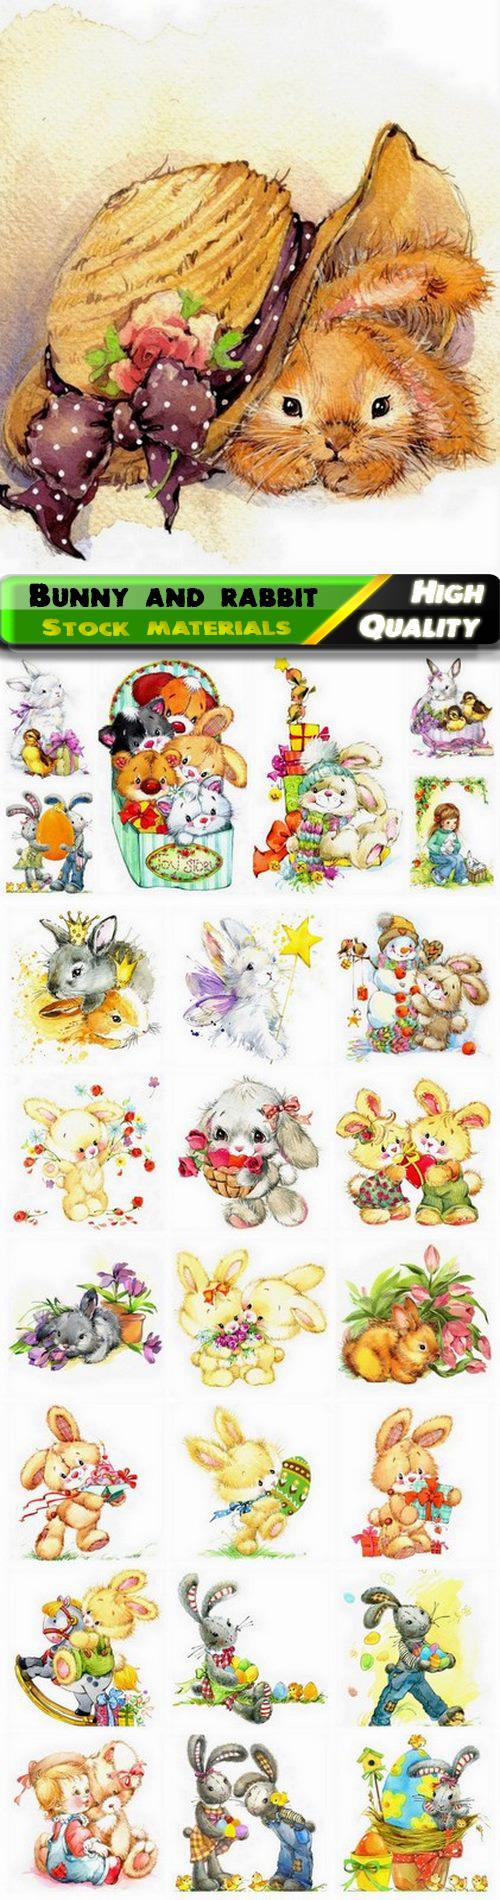 Watercolor Illustrations of bunny and rabbit creative art - 25 HQ Jpg